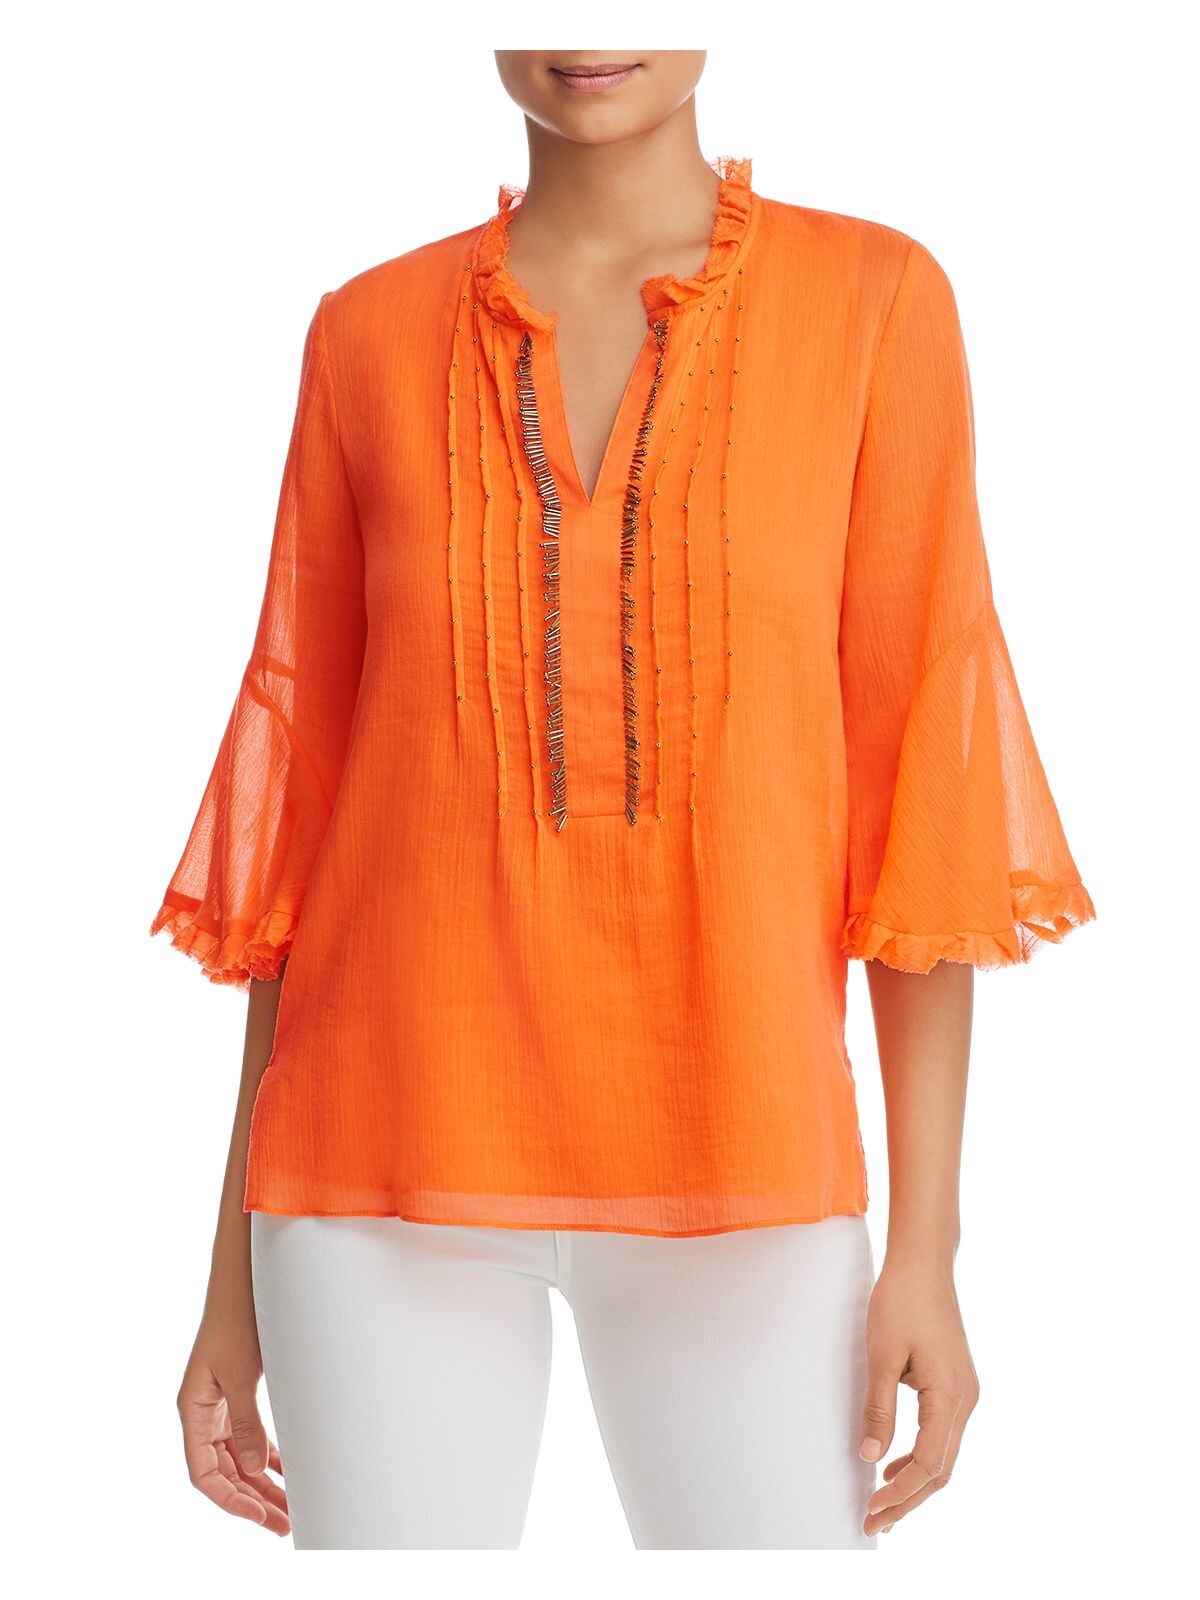 LE GALI Womens Orange Embellished Bell Sleeve Tunic Top XS